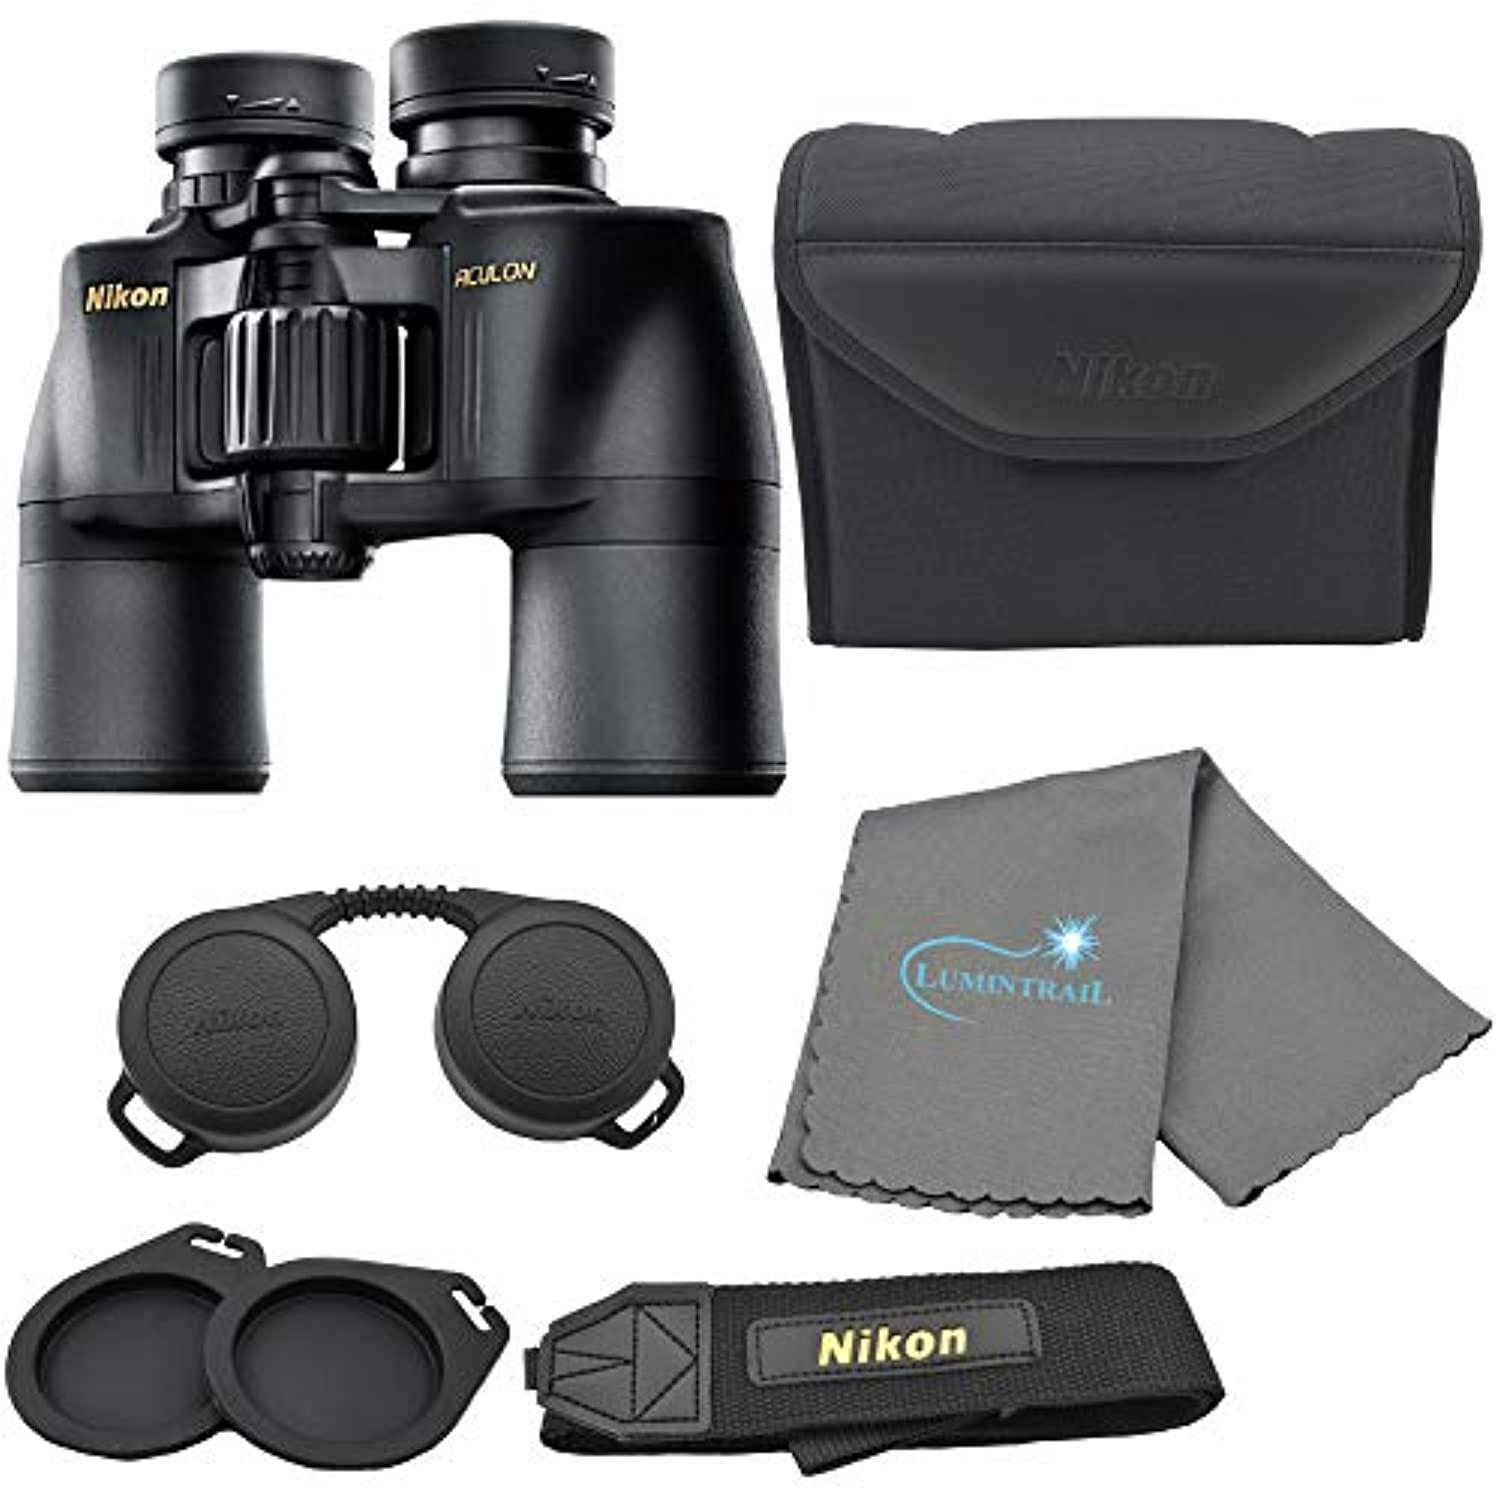 nikon aculon a211 8x42 binoculars black (8245) bundle with a lumintrail cleaning cloth